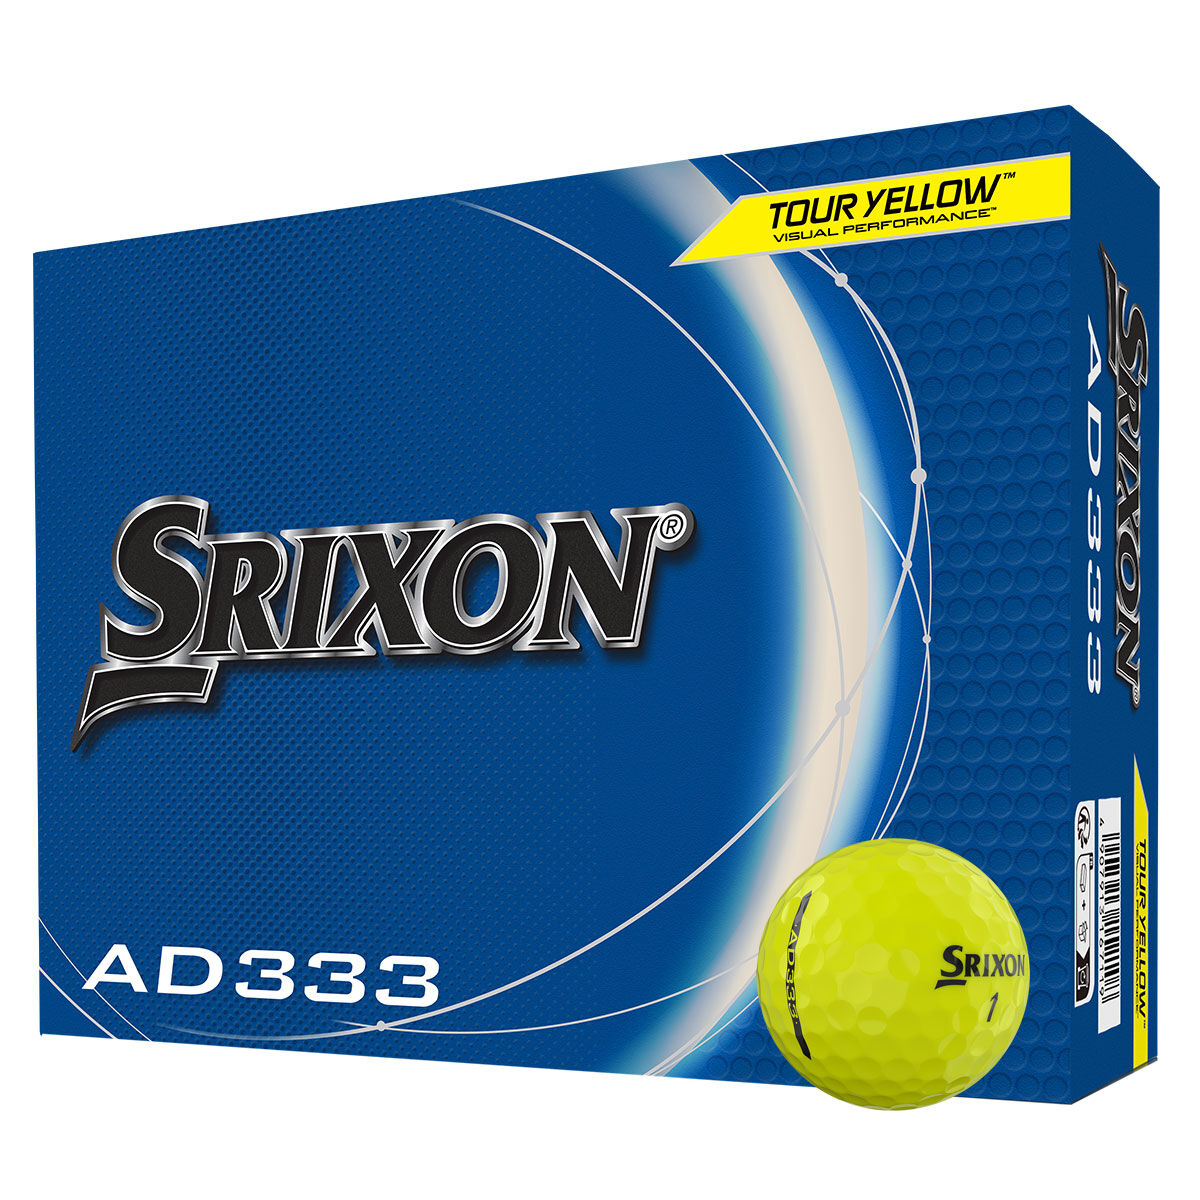 Srixon AD333 12 Golf Ball Pack, Mens, Tour yellow | American Golf